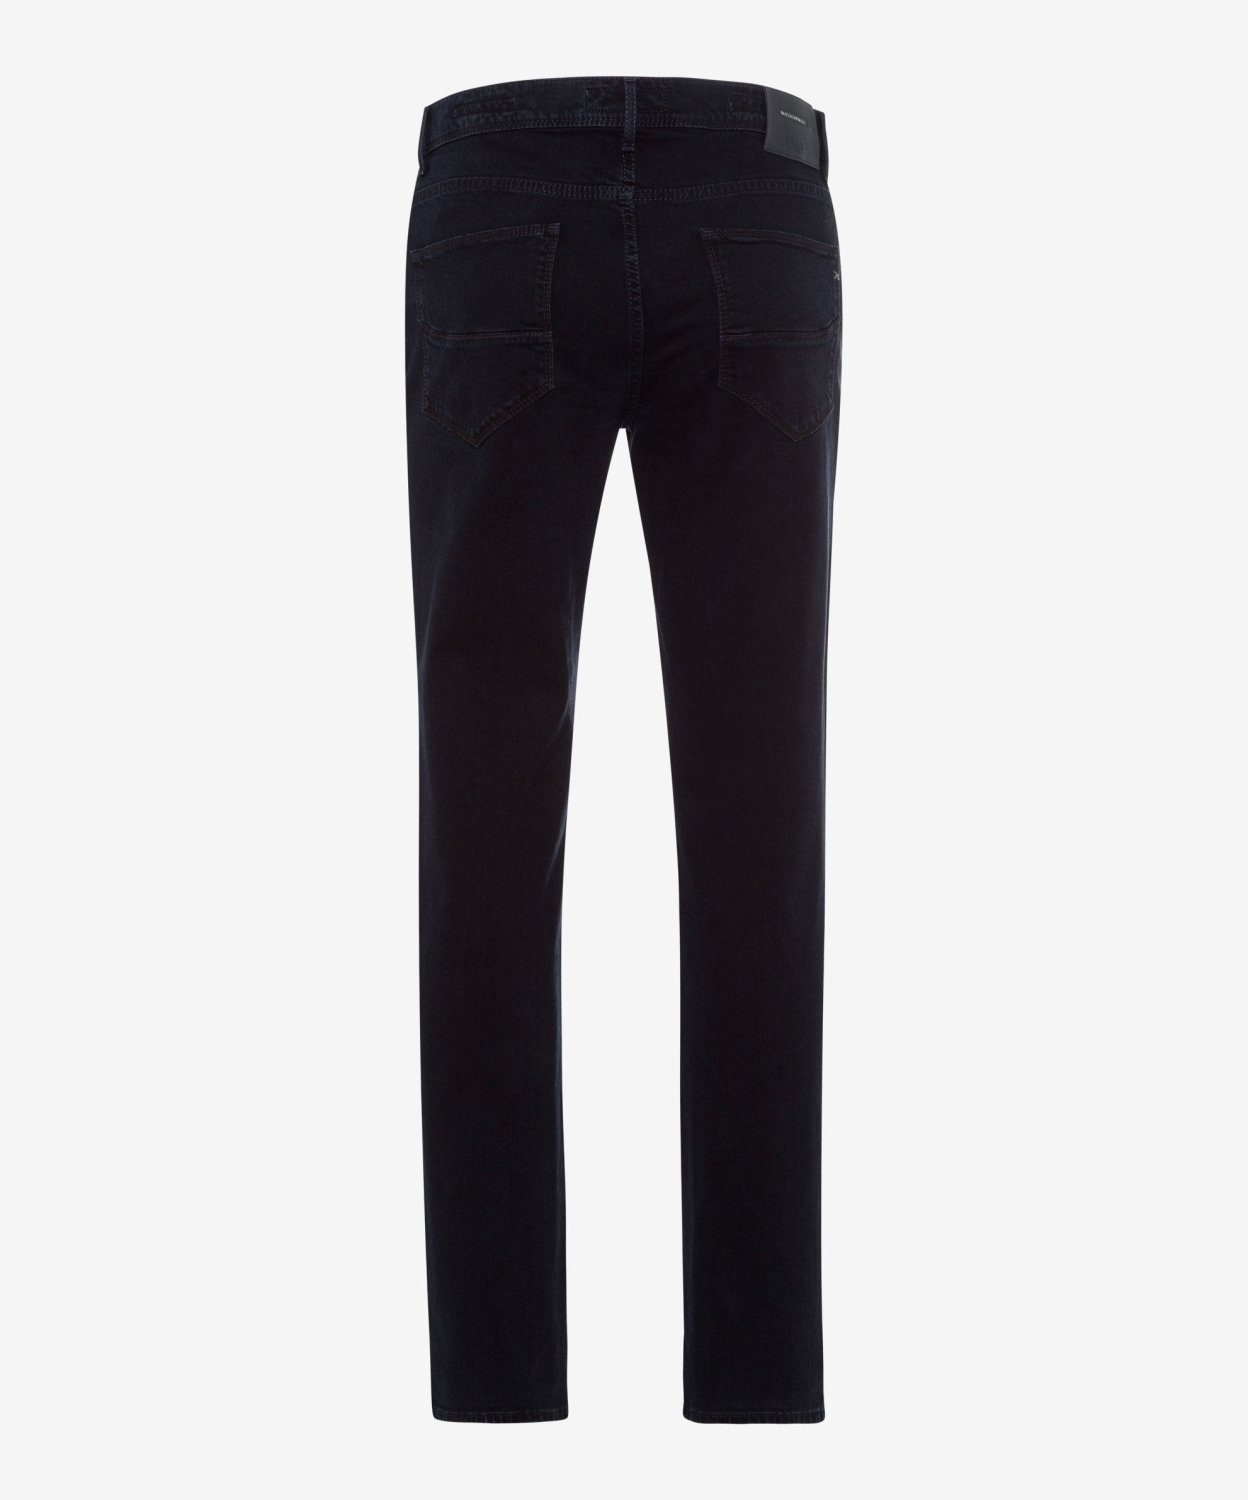 Herren Style blue 5-Pocket-Hose black Brax Jeans Cadiz